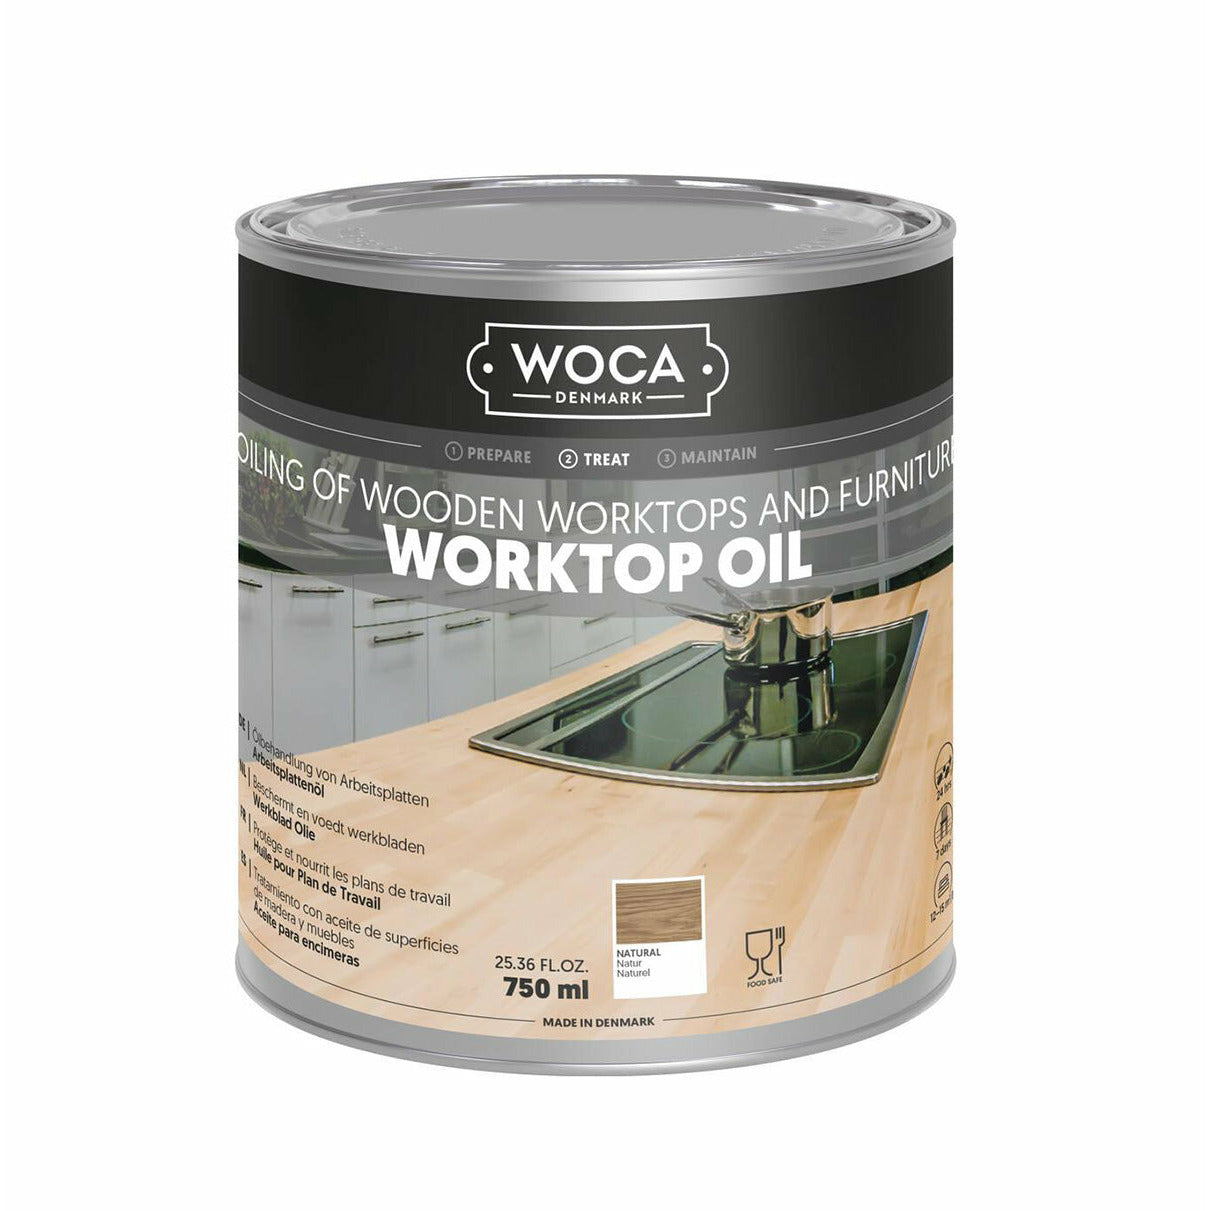 Muubs Worktop Oil natural Woca 750 ml - Natural - Olie - H: 12 Ø: 11 cm - DesignGaragen.dk.